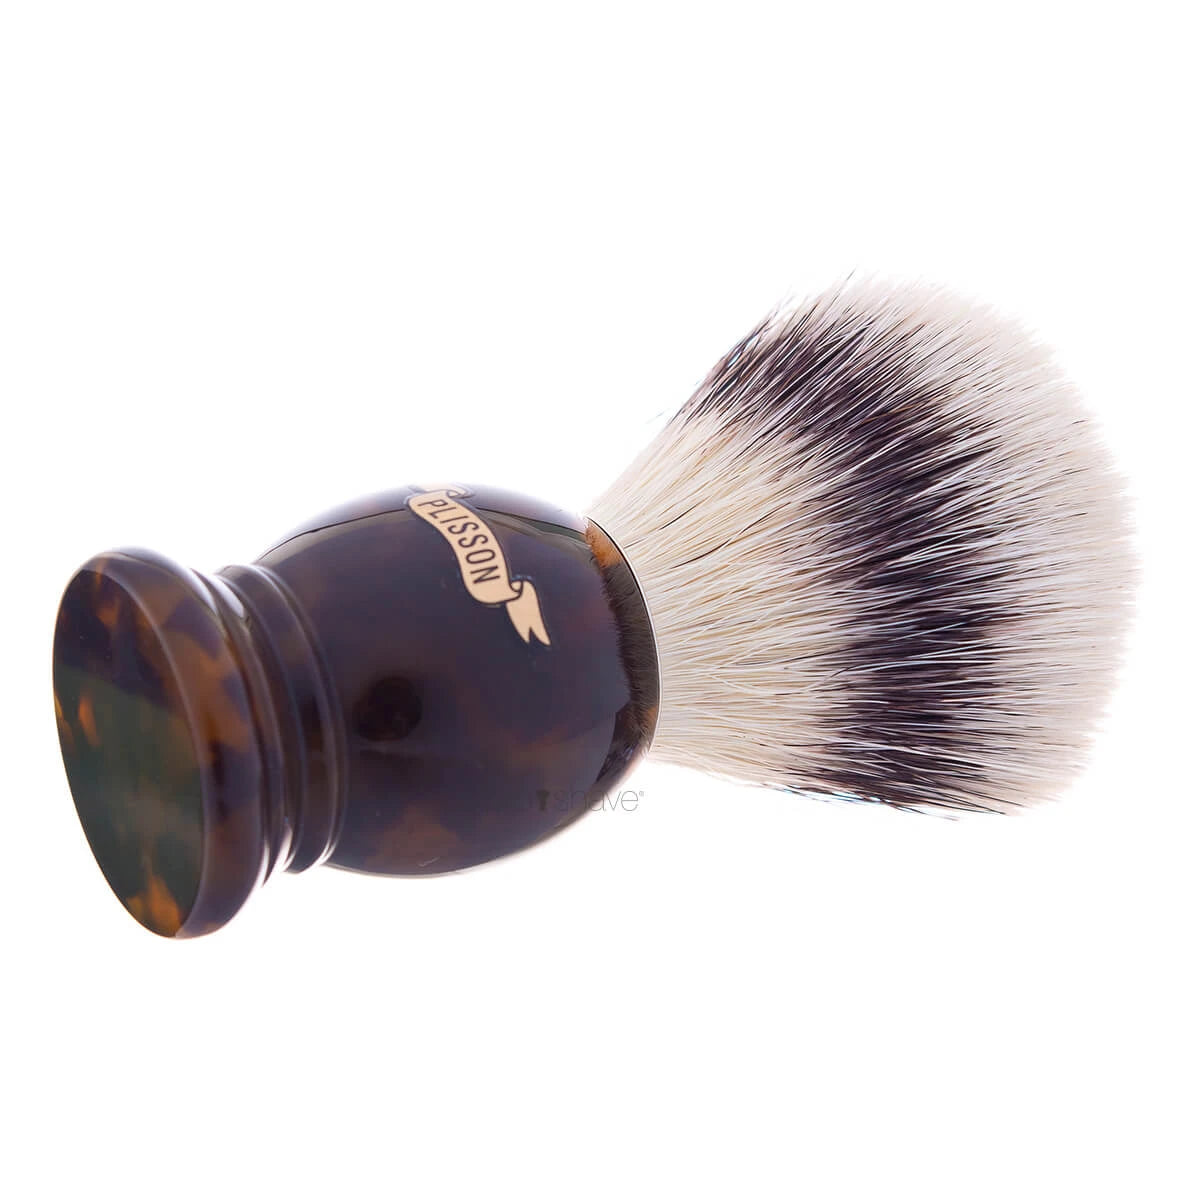 Plisson Shaving Brush, High Mountain White Fibre & Imit. Tortoiseshell- Size 12